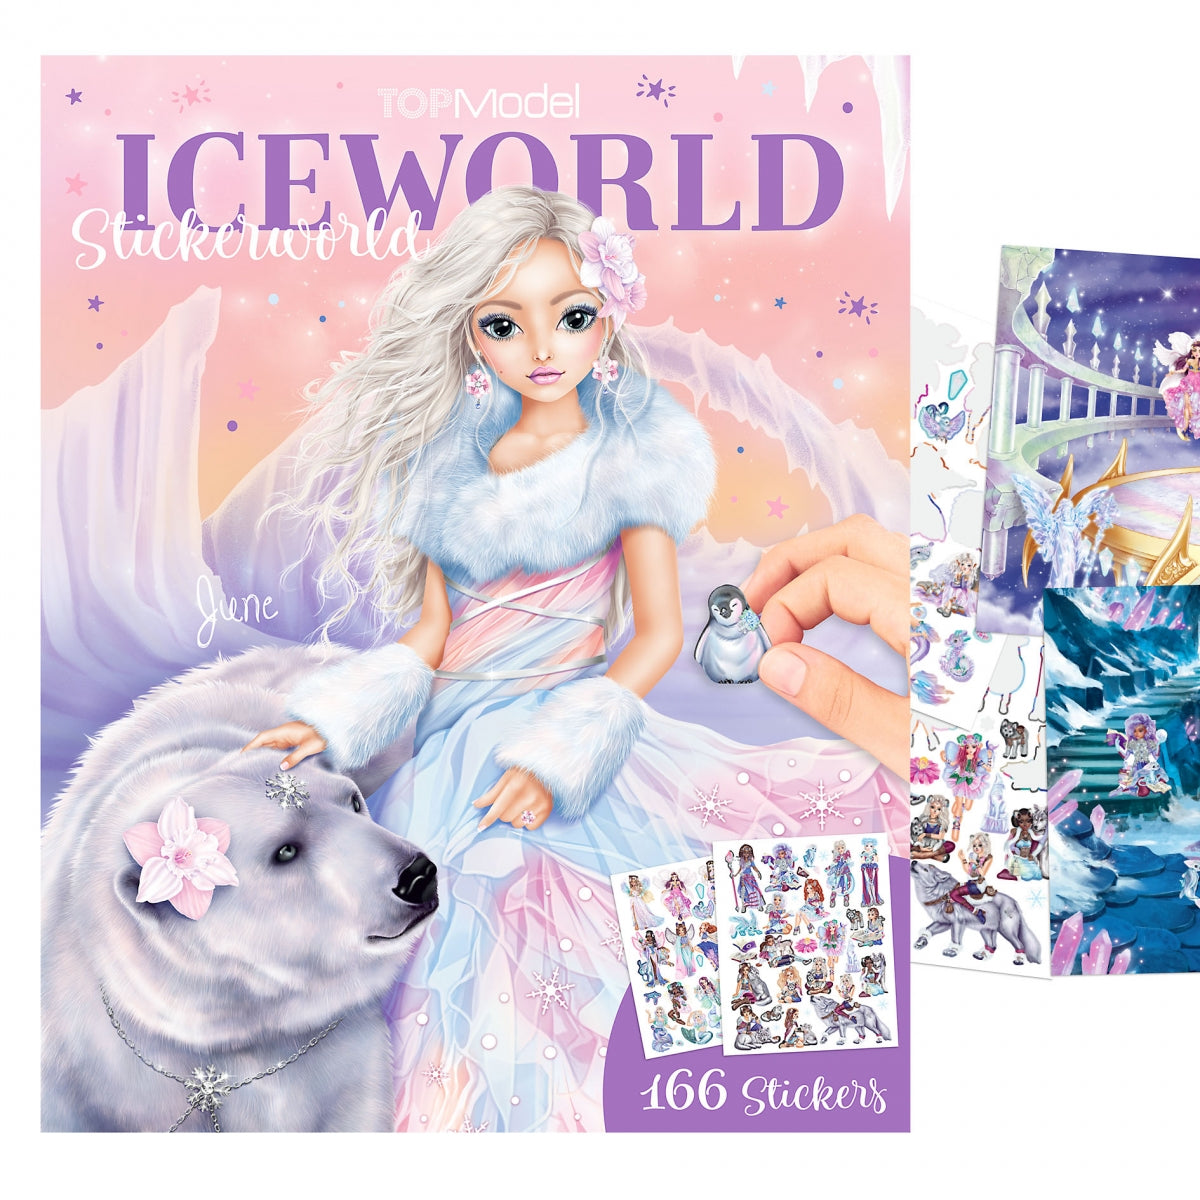 Top Model Stickerworld Iceworld